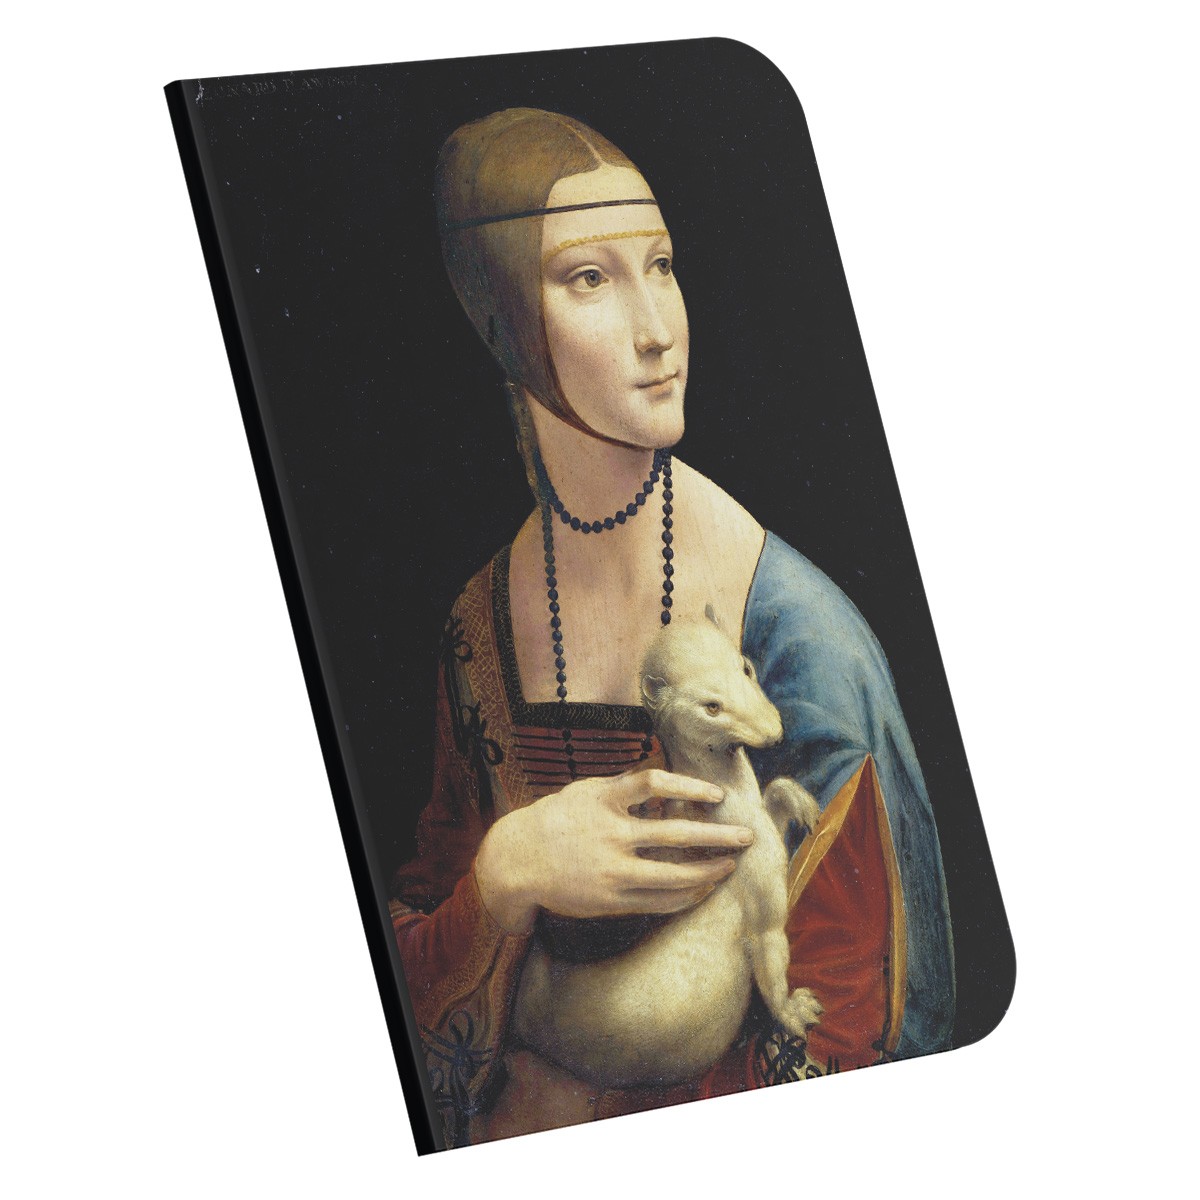 Lady with an Ermine / Da Vinci, 1490 / A4 Defter -8